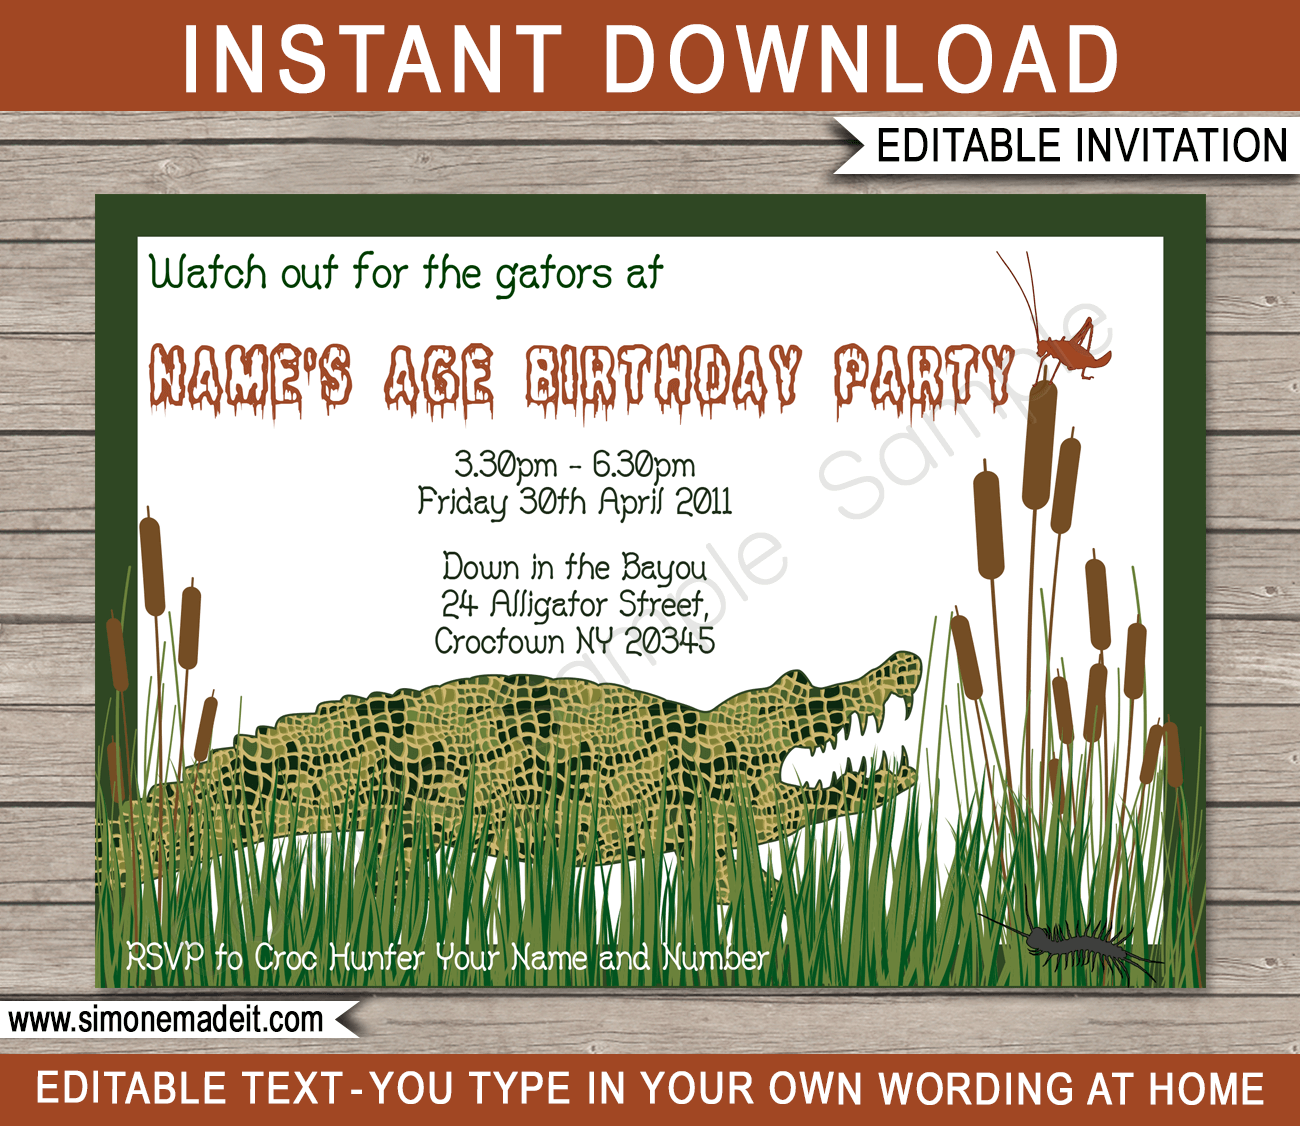 https://www.simonemadeit.com/wp-content/uploads/edd/2014/03/Printable-Swamp-Party-Invitation-Template.png